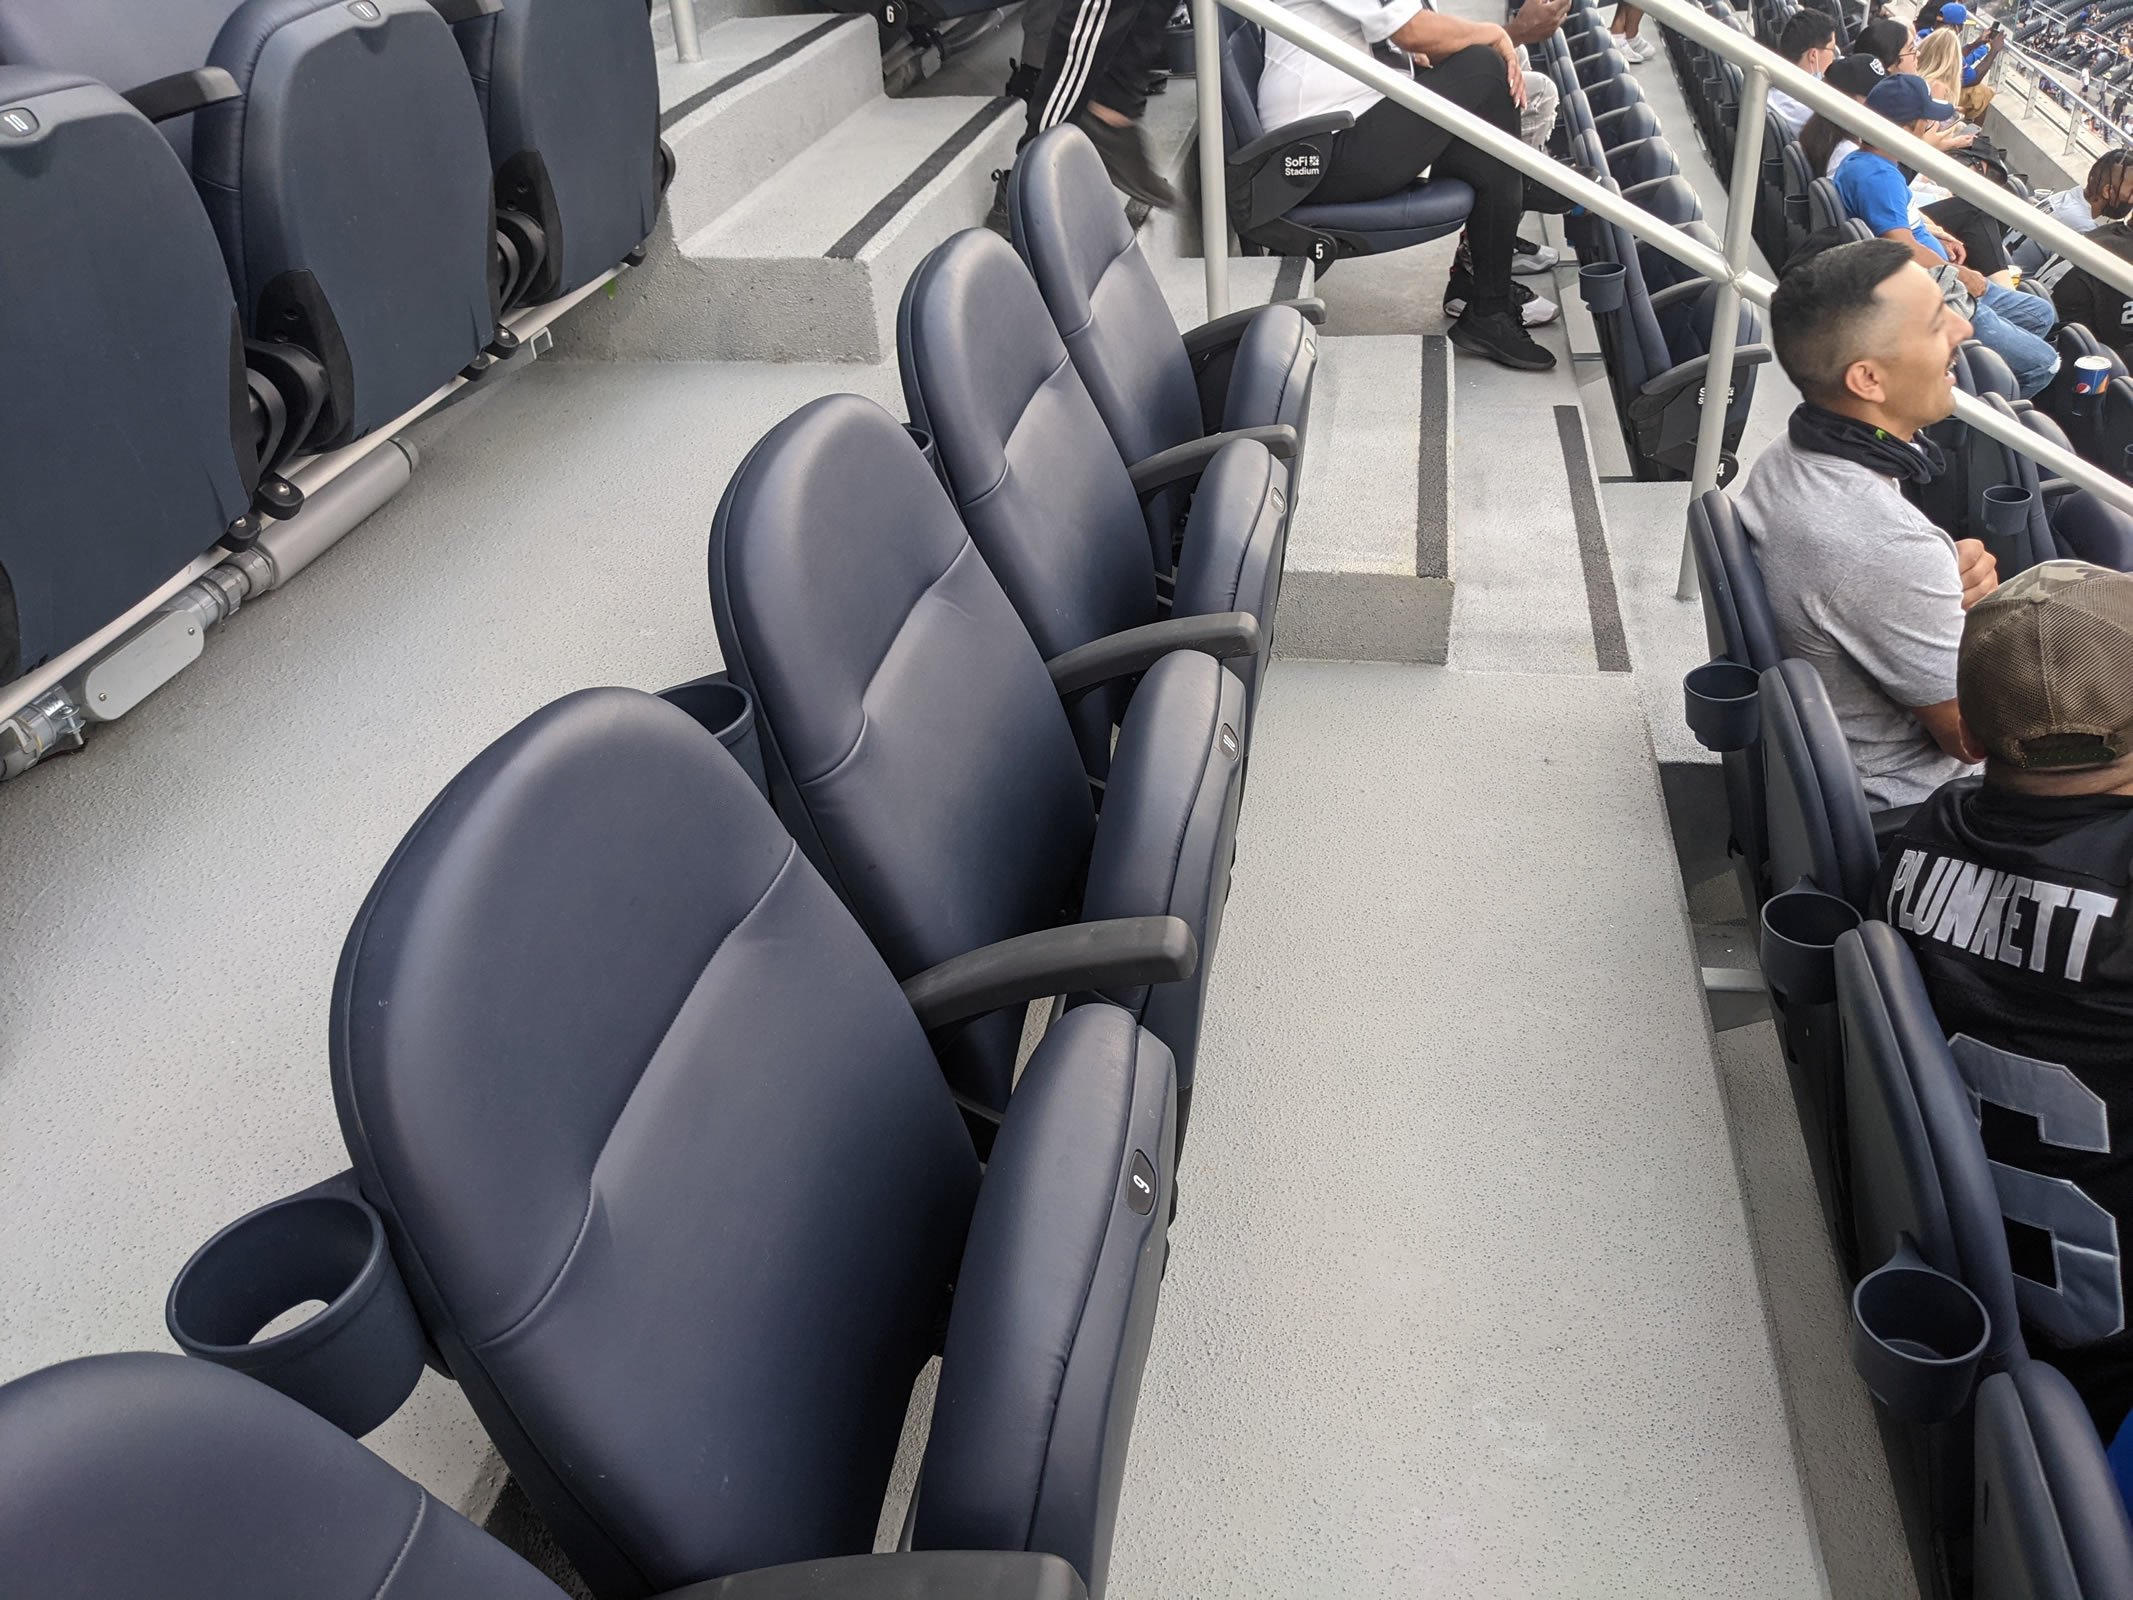 padded club seats at sofi stadium